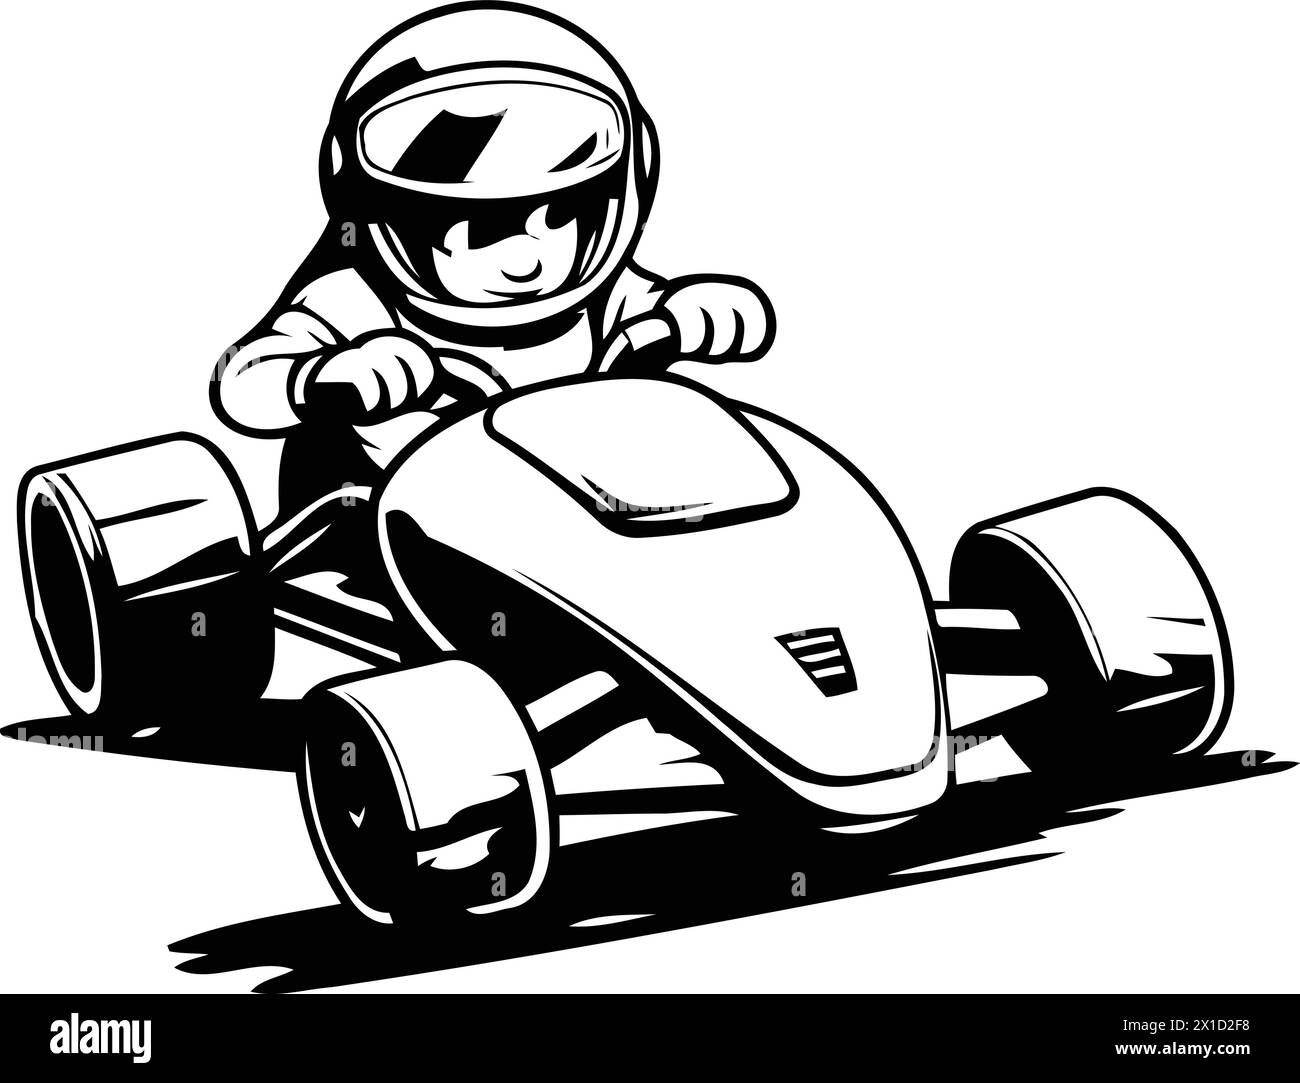 Cartoon vector illustration of a young man driving a race car. Stock Vector